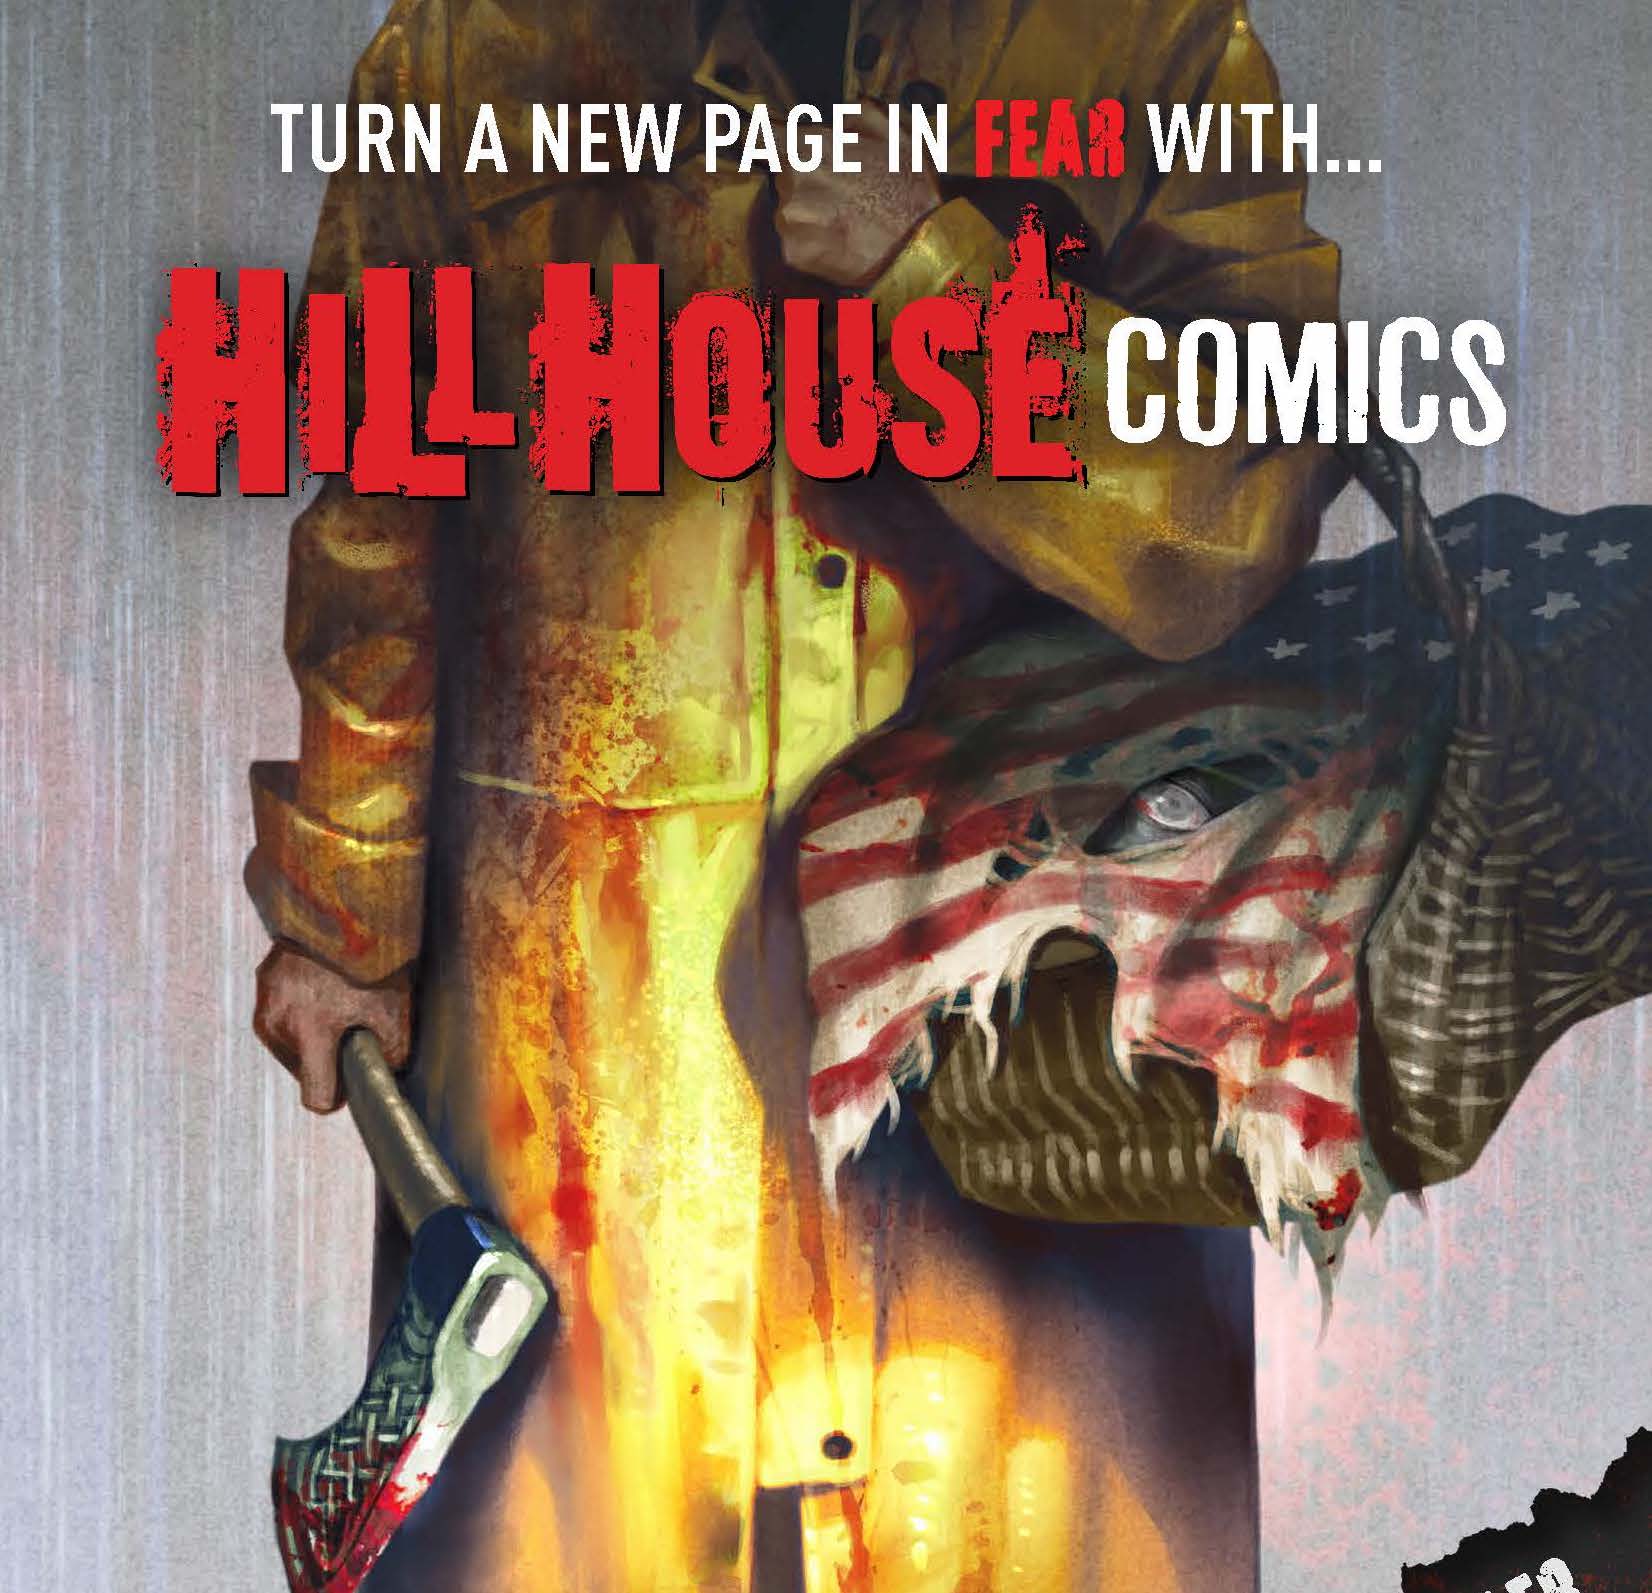 DC Comics & Joe Hill release Hill House Comics sampler